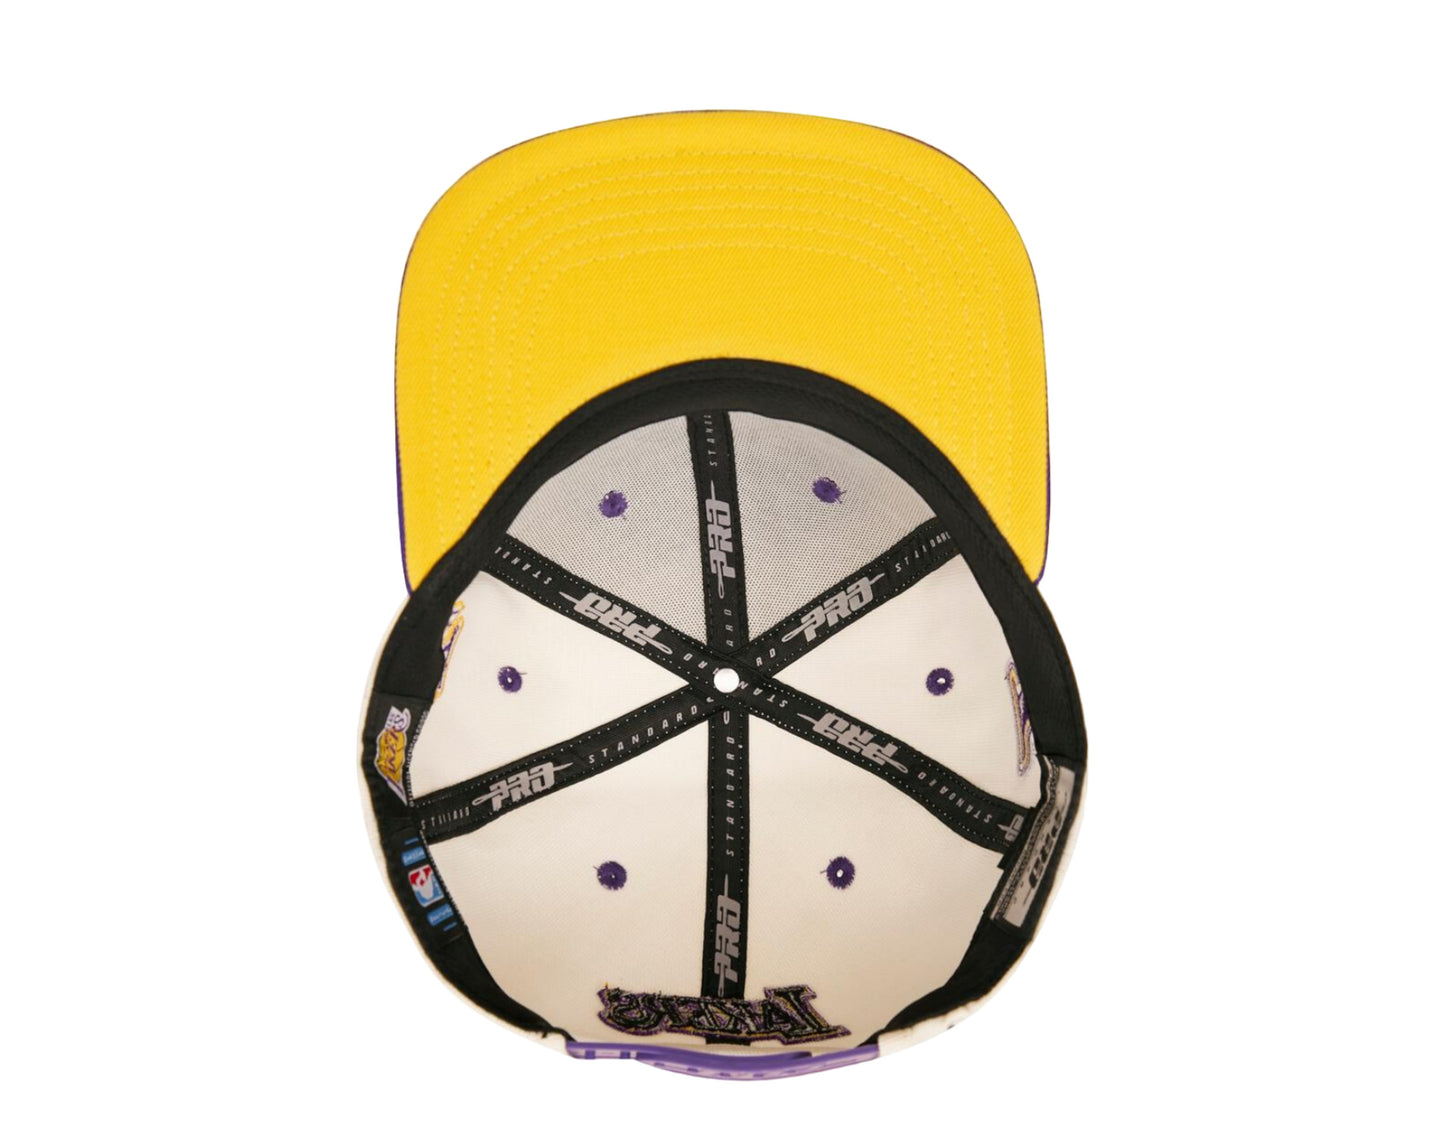 Pro Standard NBA Los Angeles Lakers Retro Classic Logo Snapback Hat